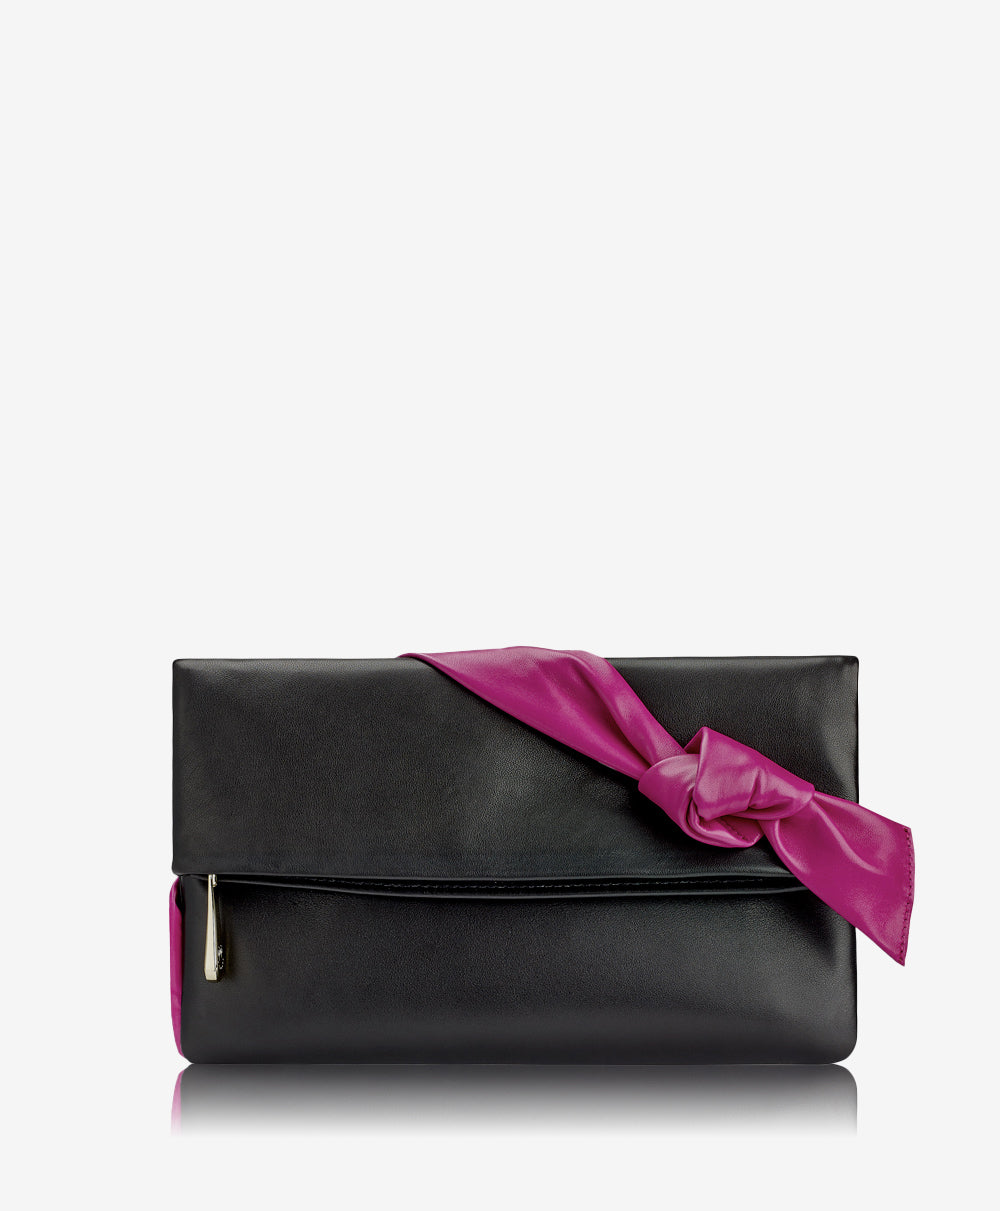 GiGi New York Stella With A Twist Black French Calfskin Leather